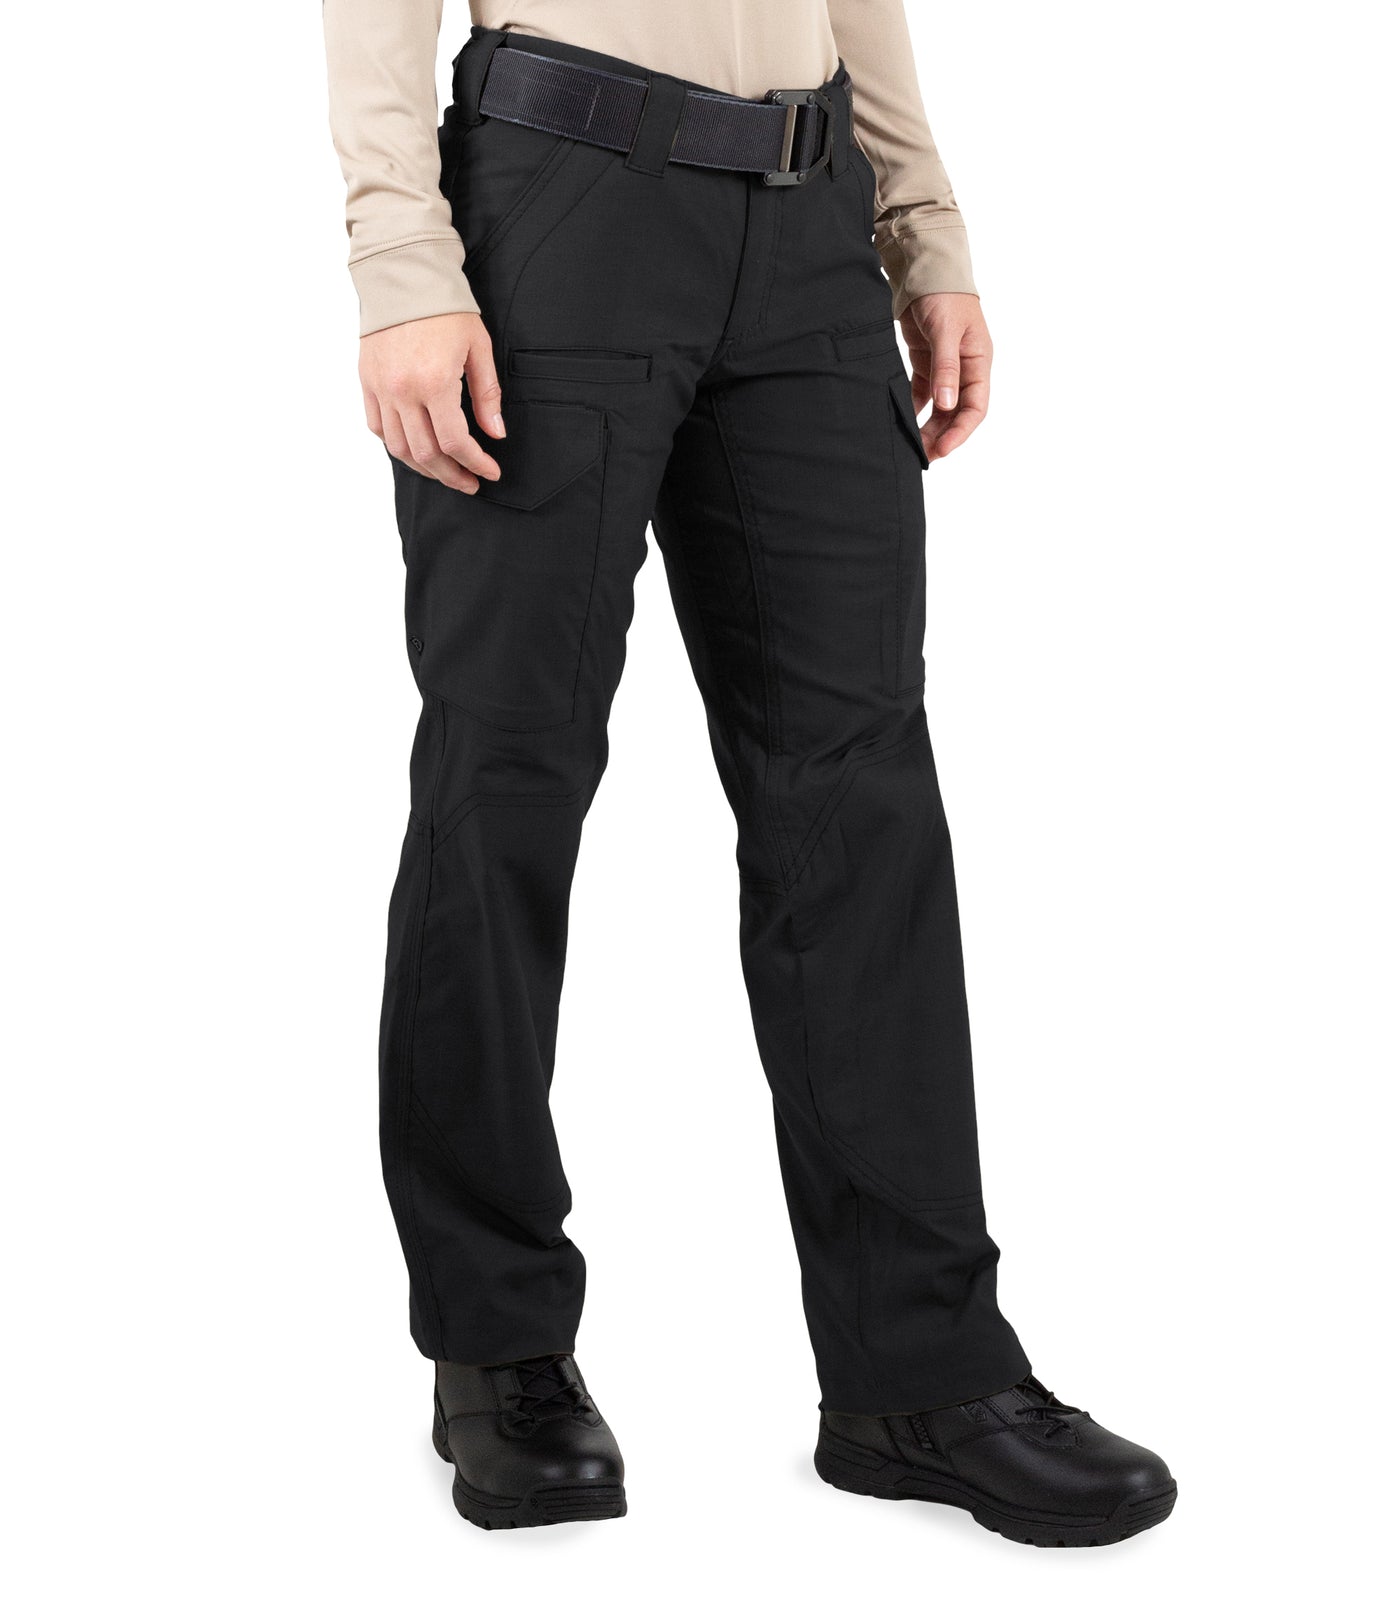 Men Cargo Pants Trousers Straight Bottoms Multi Pockets Outdoor Work  Fishing | eBay